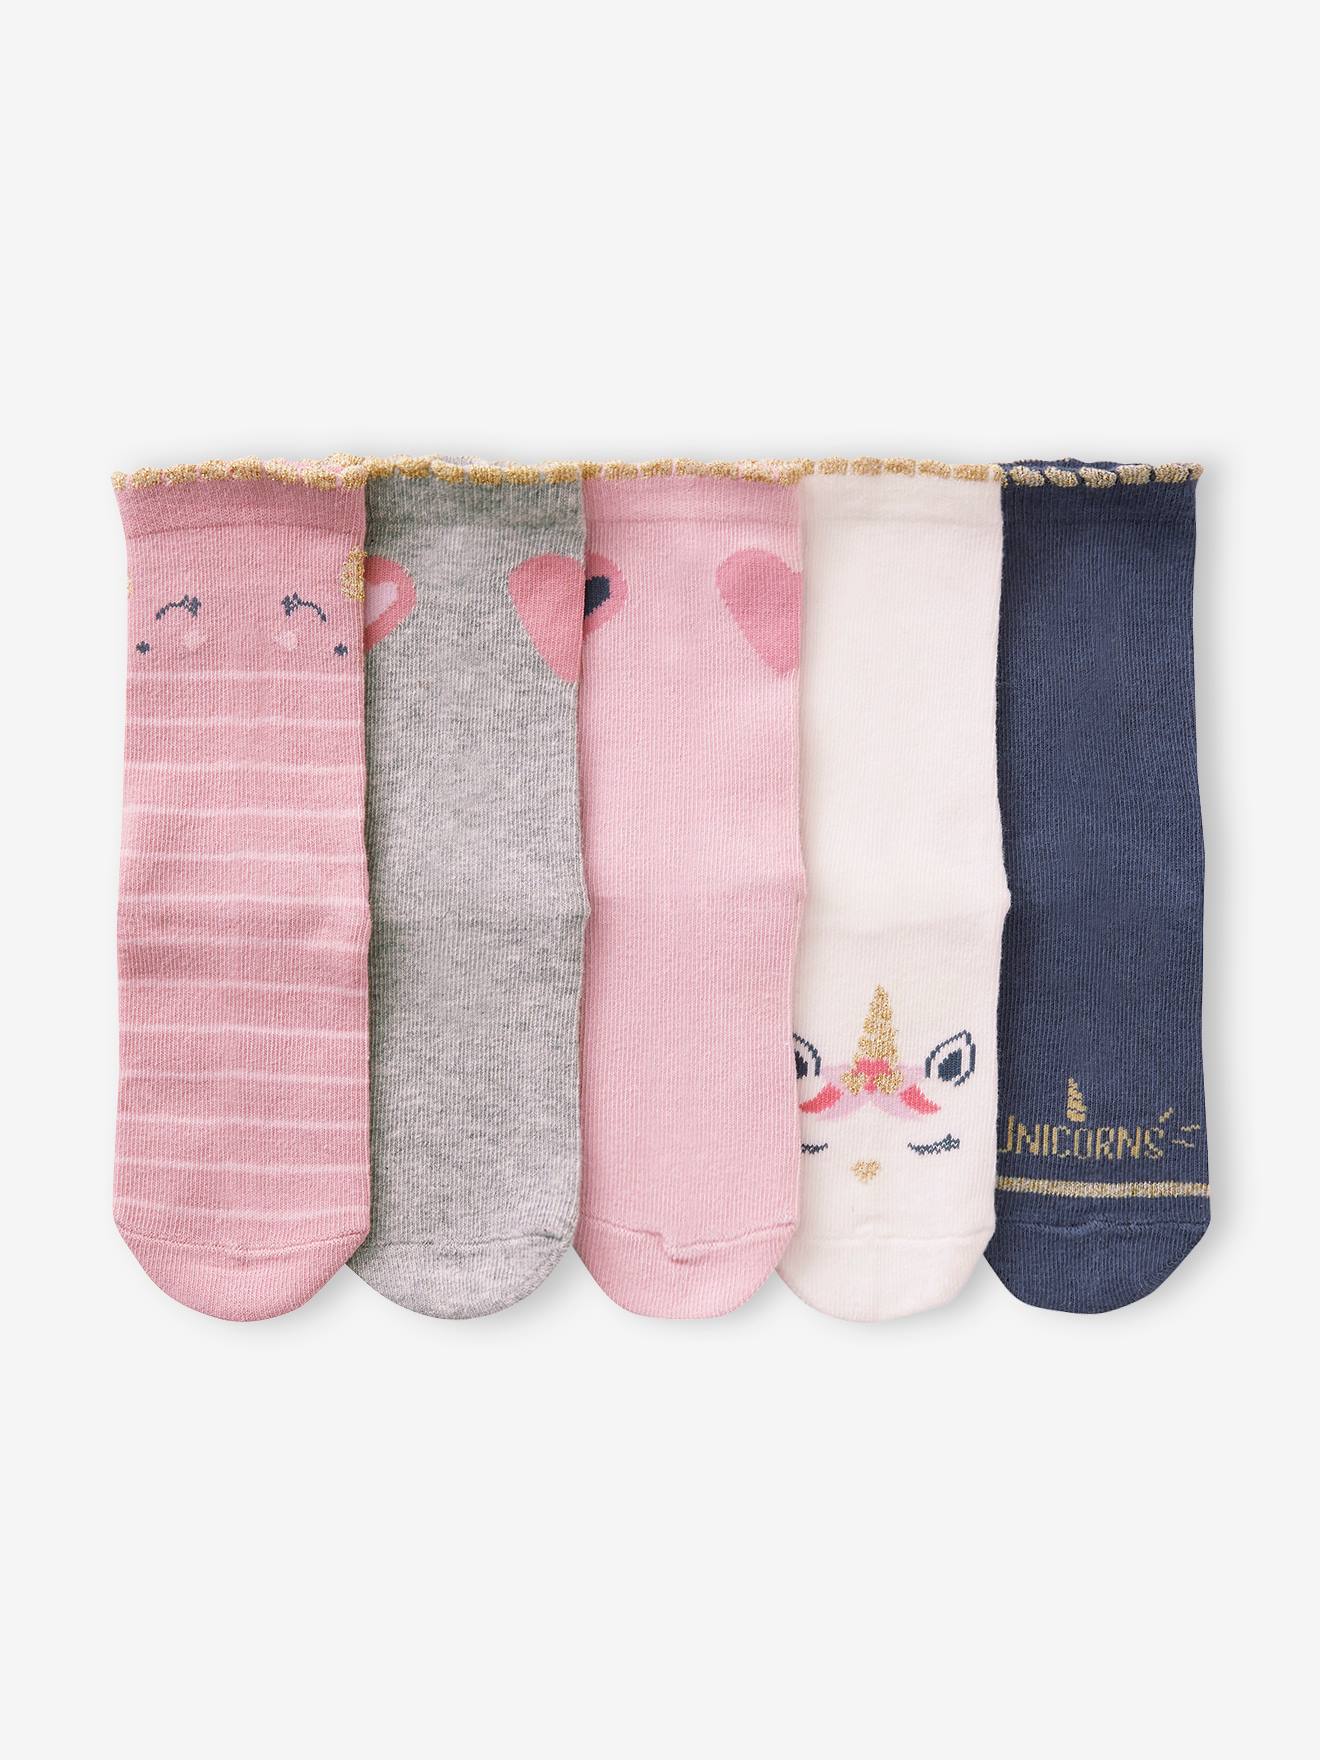 Pack of 5 Pairs of Unicorns & Hearts Socks for Girls rose